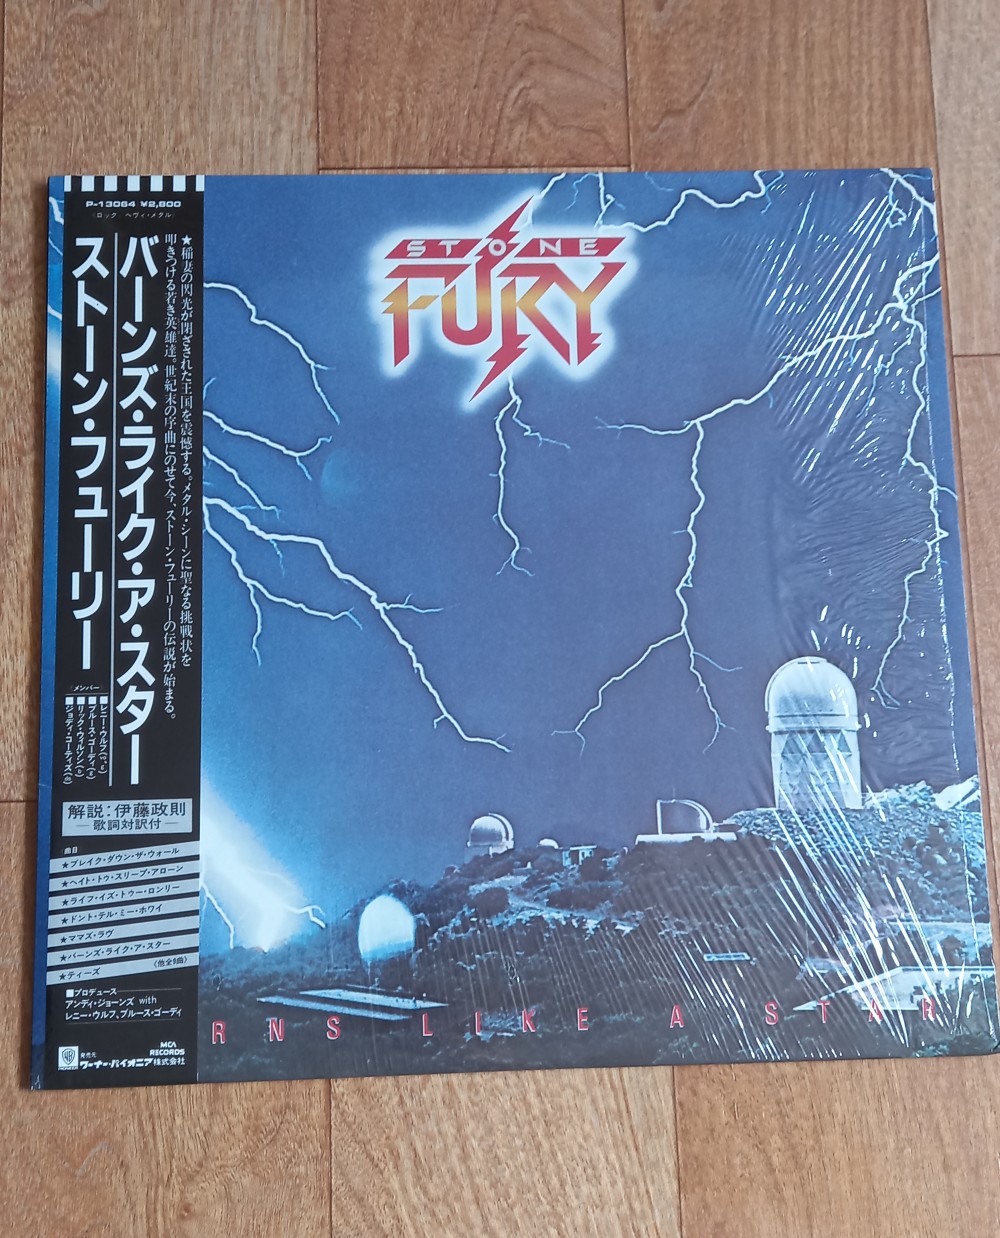 Stone Fury - Burns Like a Star Vinyl Photo | Metal Kingdom